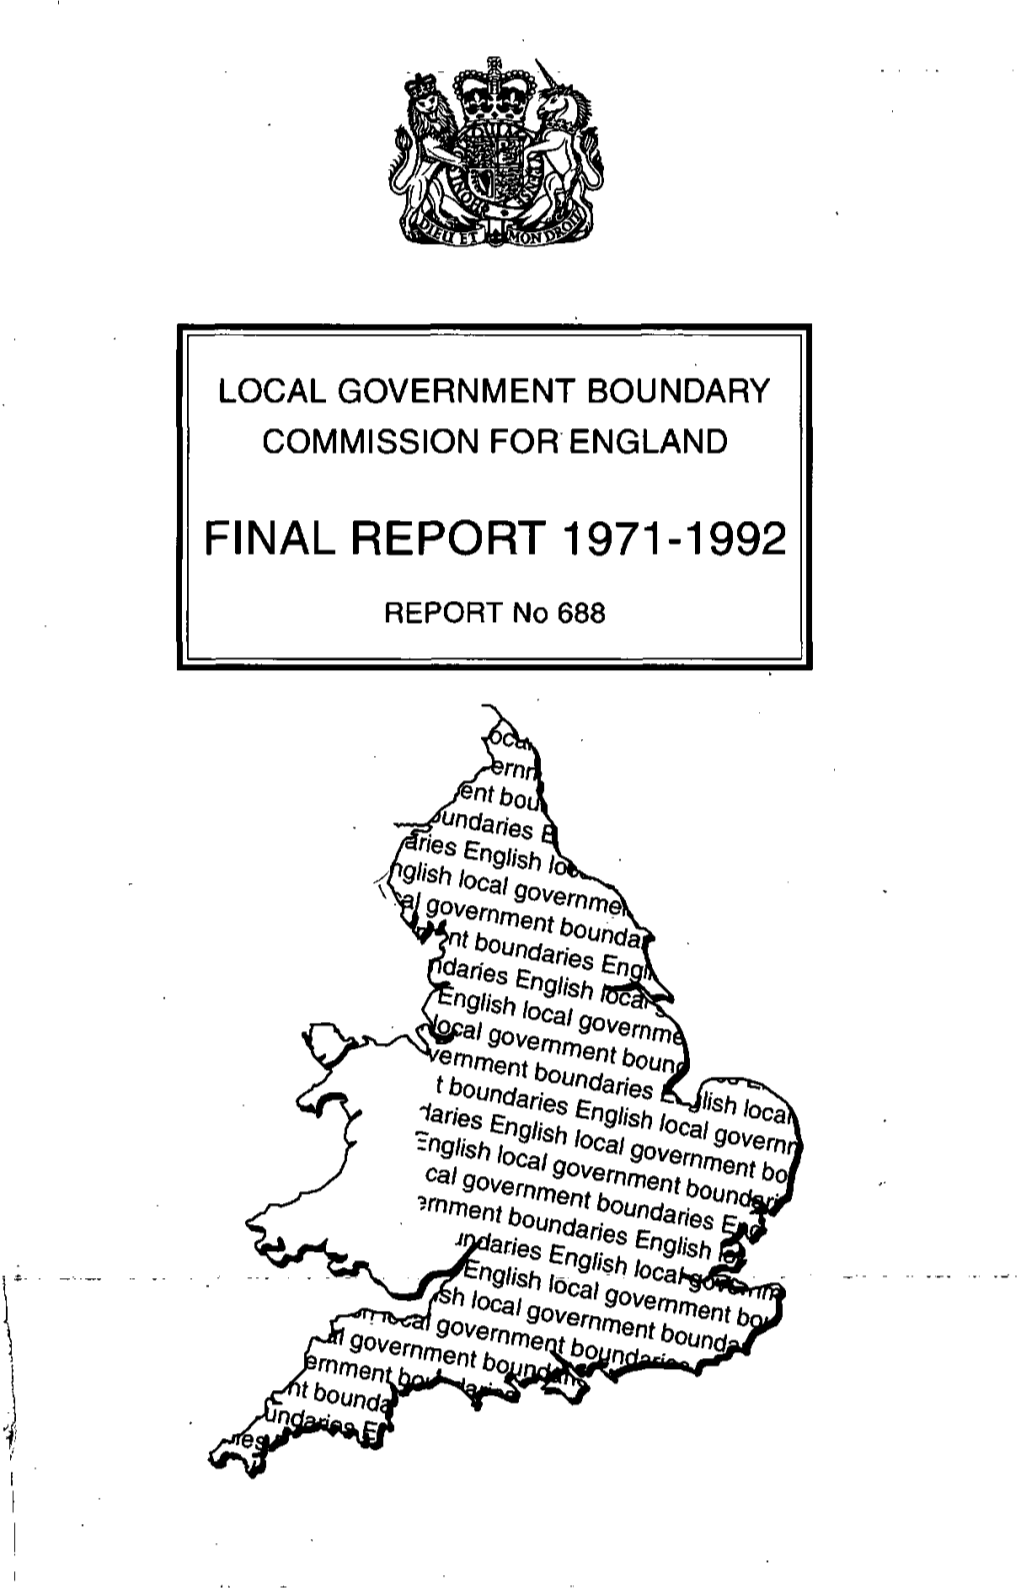 Final Report 1971-1992